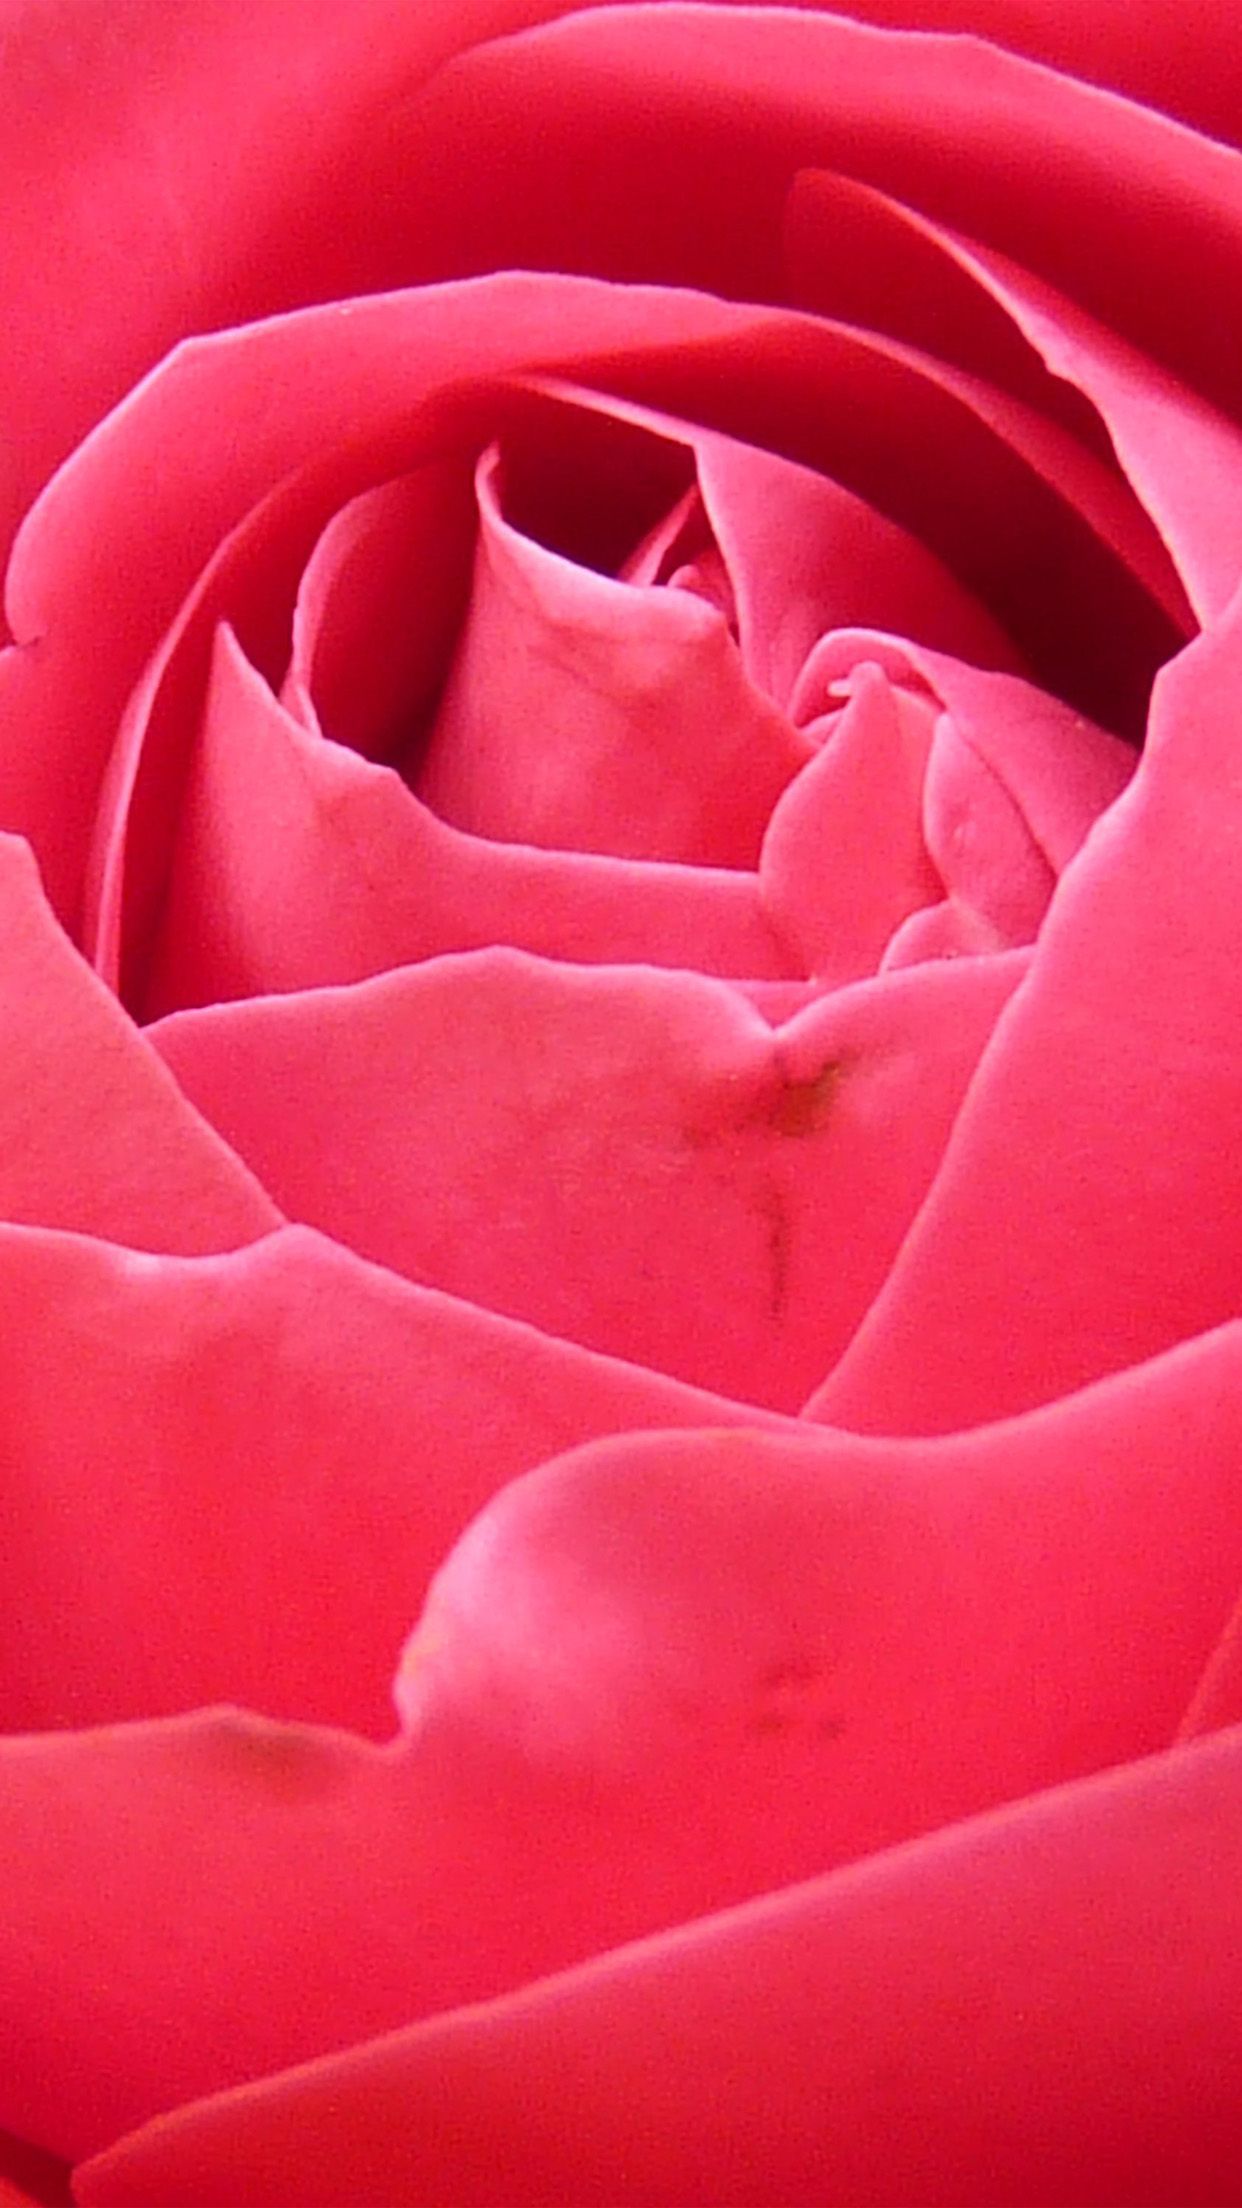 Pink Rose Petals Close Up Flowers iPhone HD Wallpaper HD